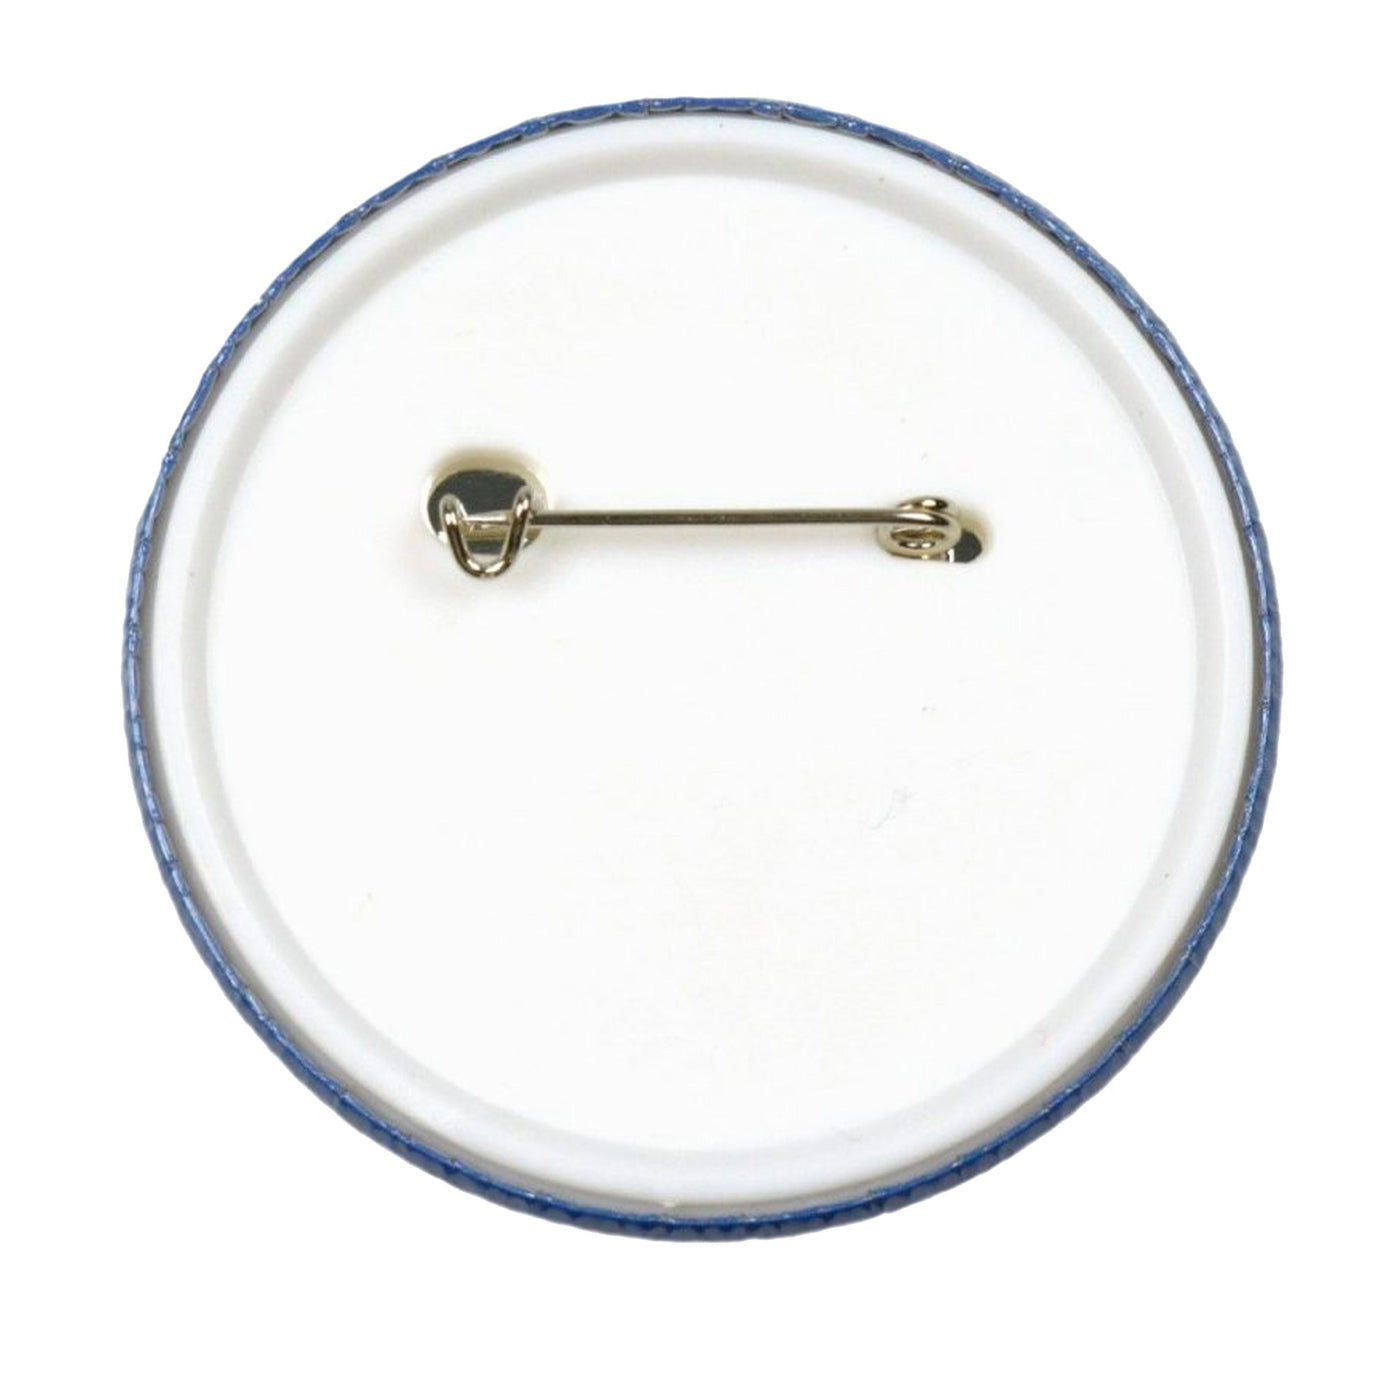 Lavender Menace Small Pin Badge